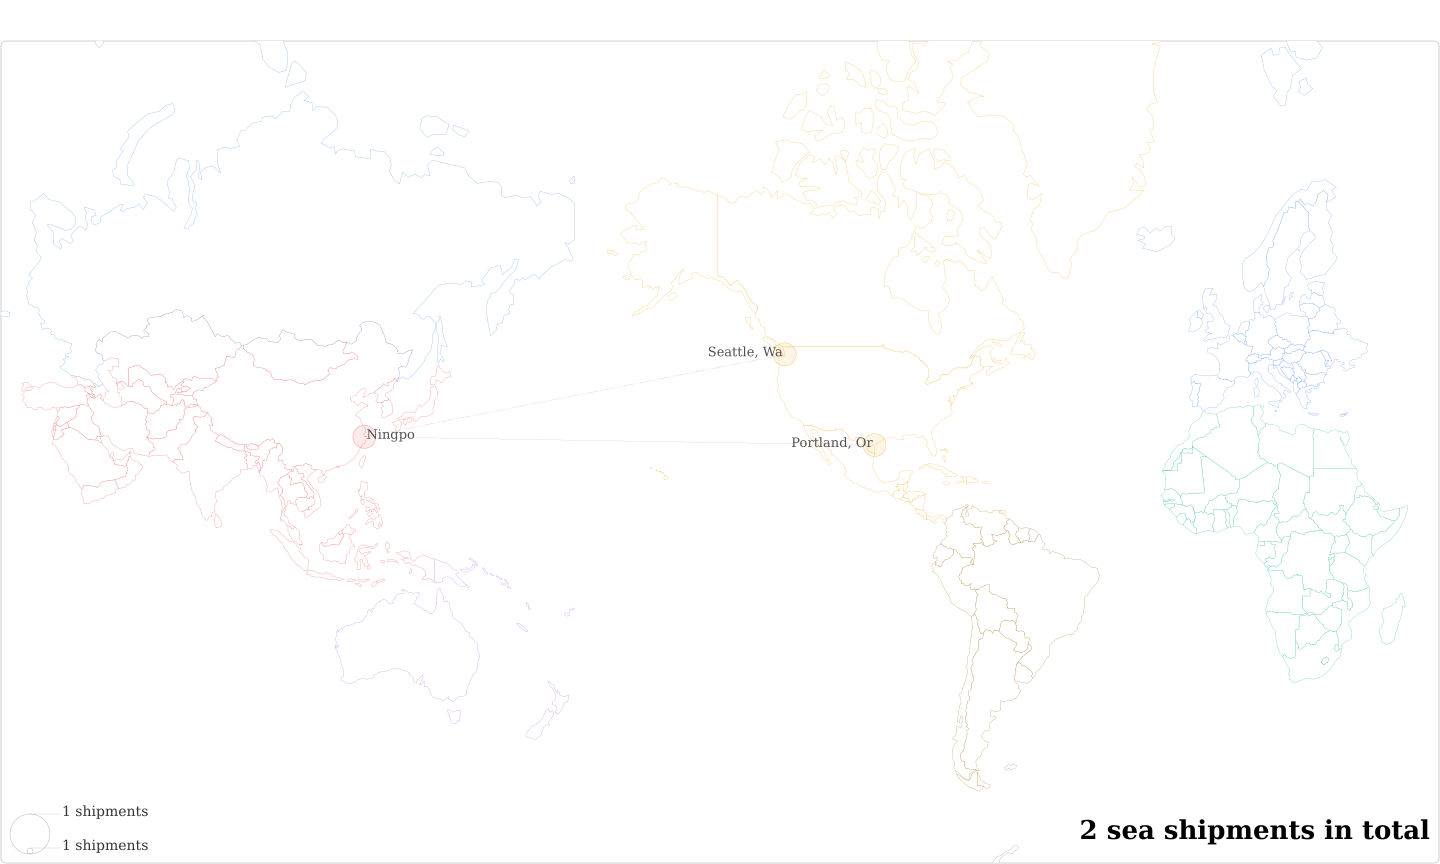 Pitman Restaurant Equipment's Imports Per Country Map